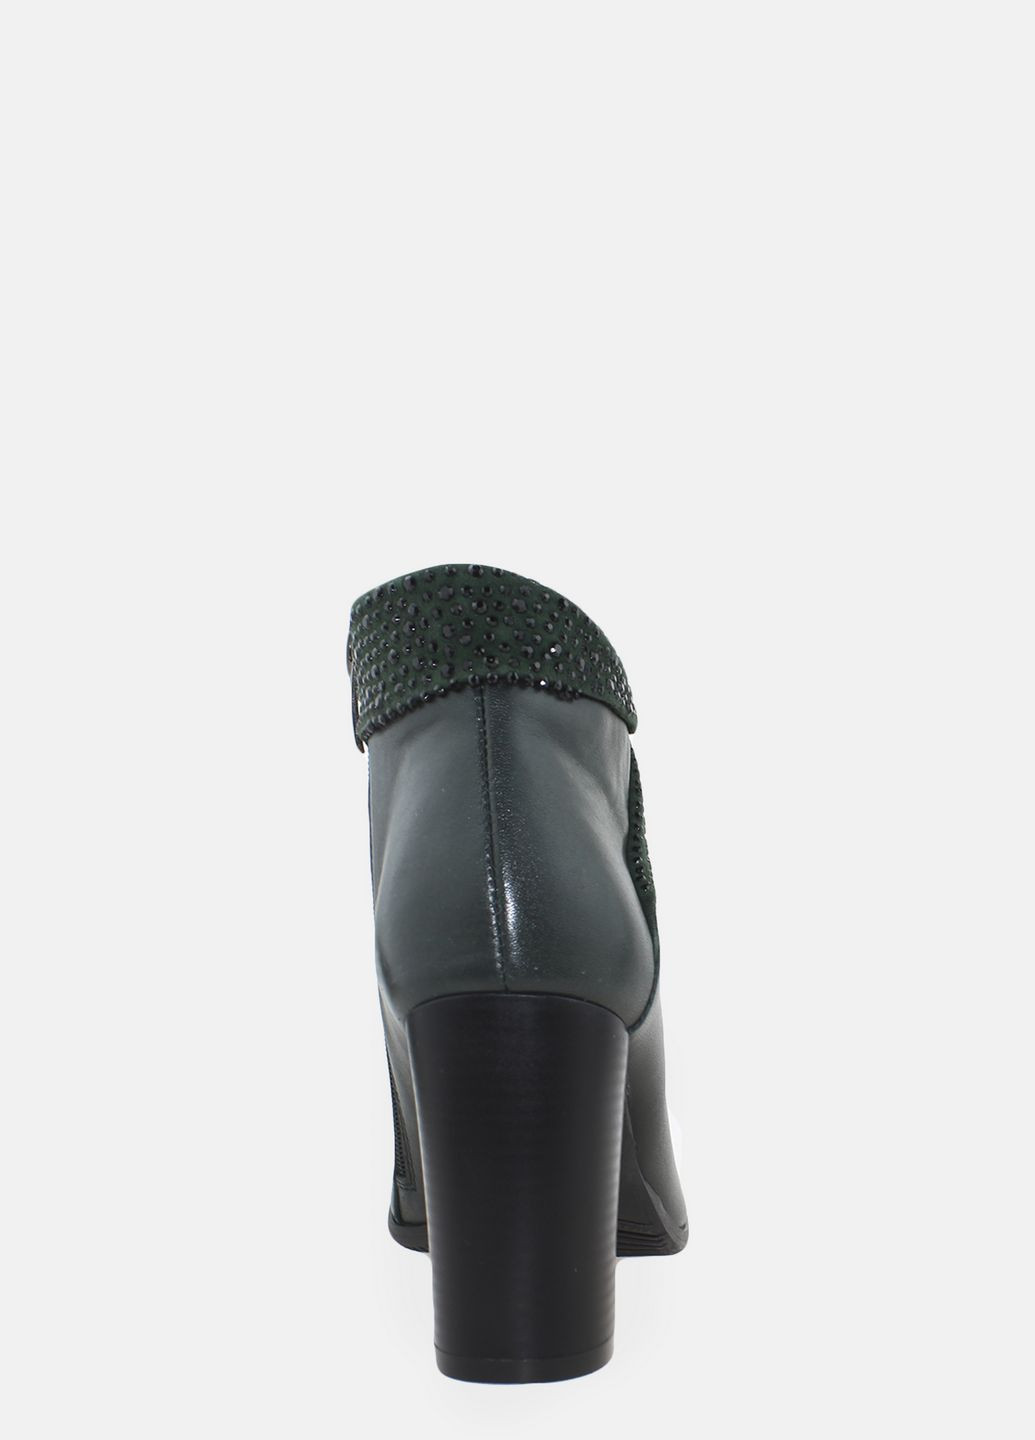 Осенние ботинки rr163207-17 зелёный Romax